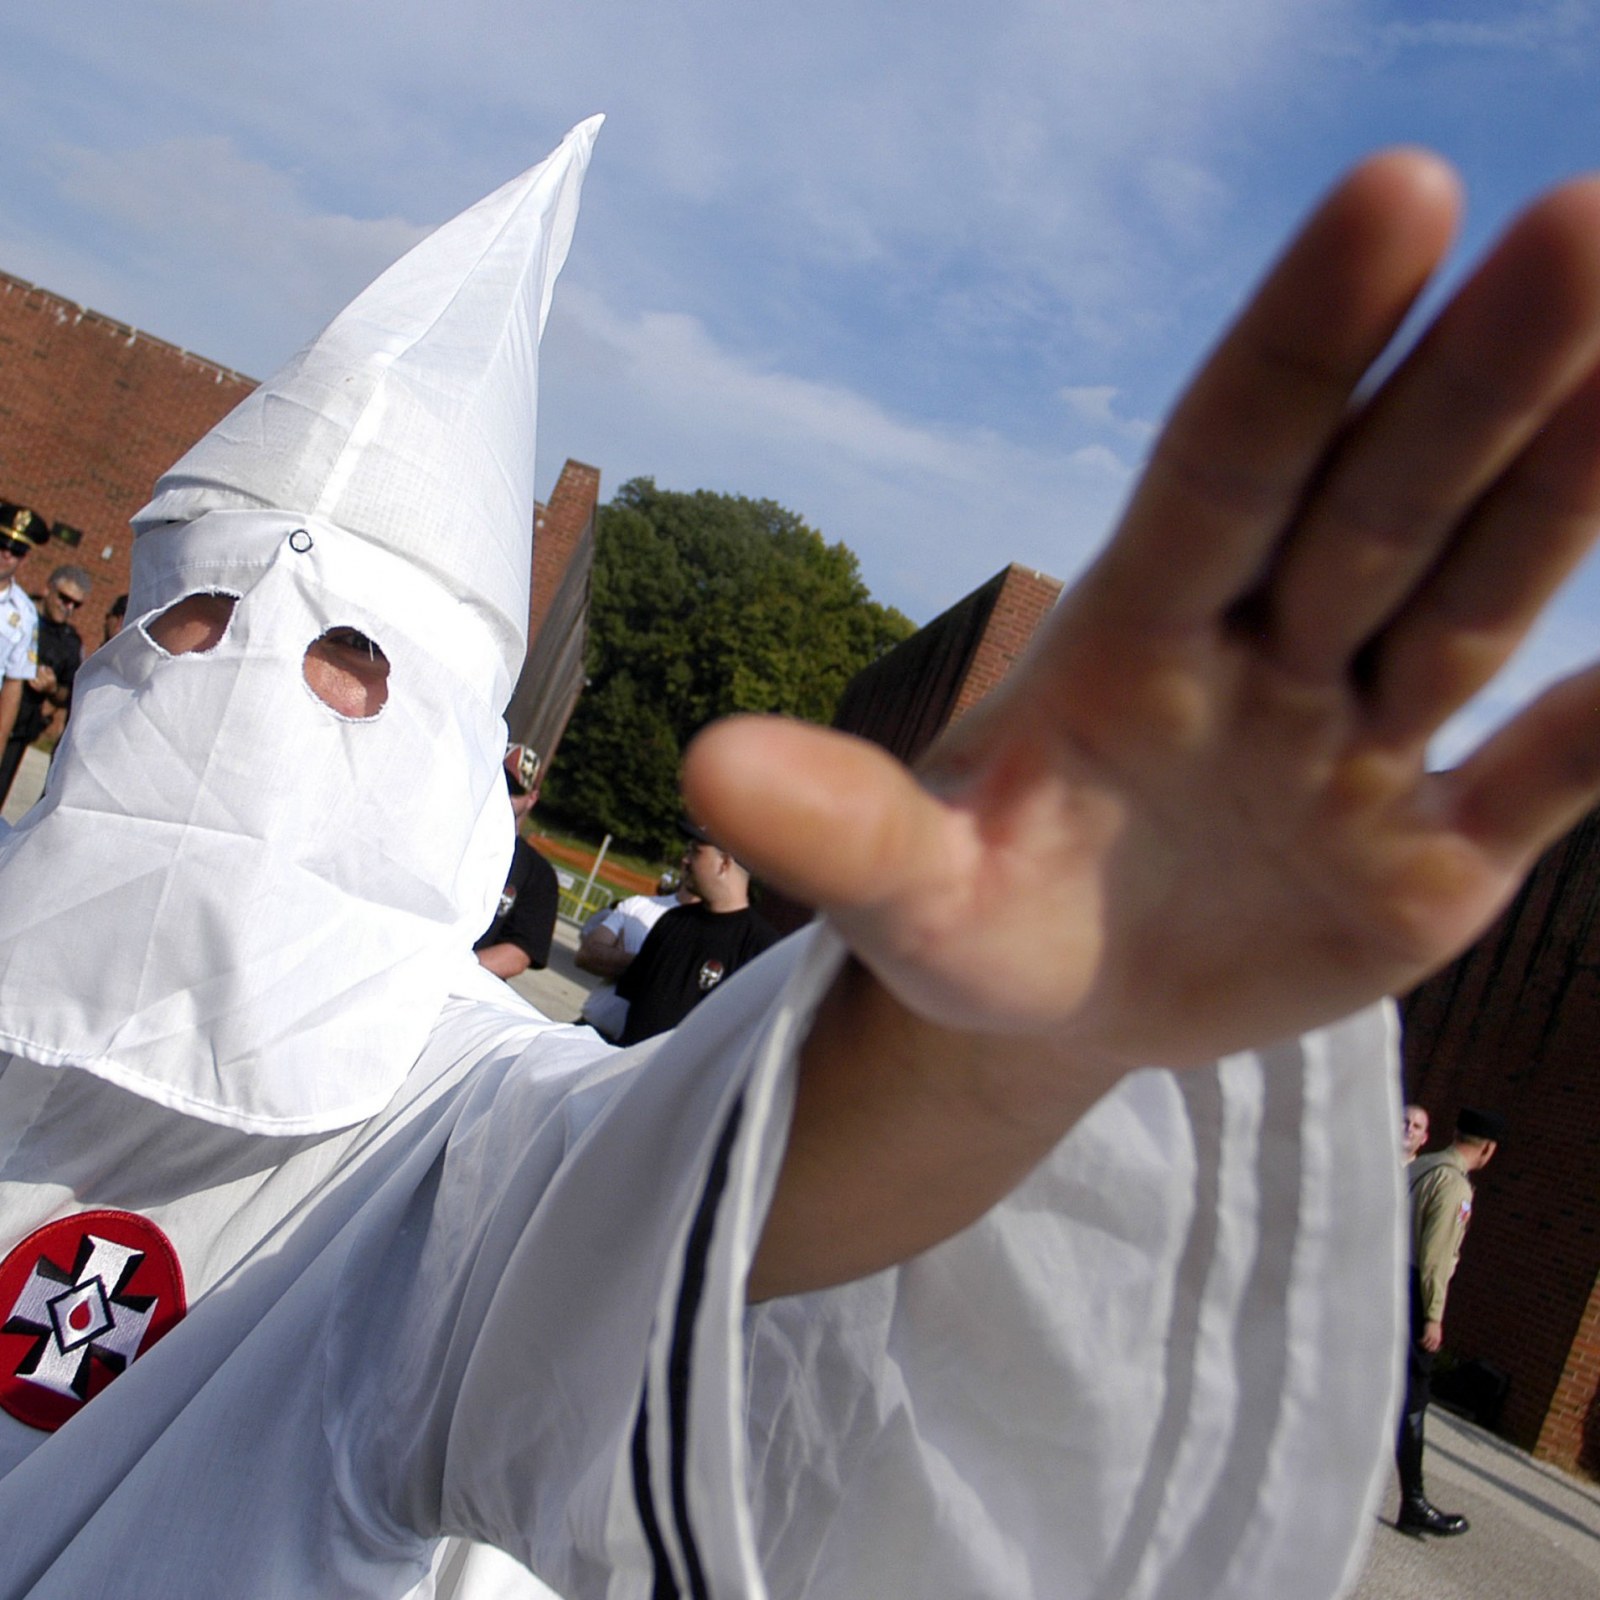 Swiss police investigate KKK carnival costumes - SWI